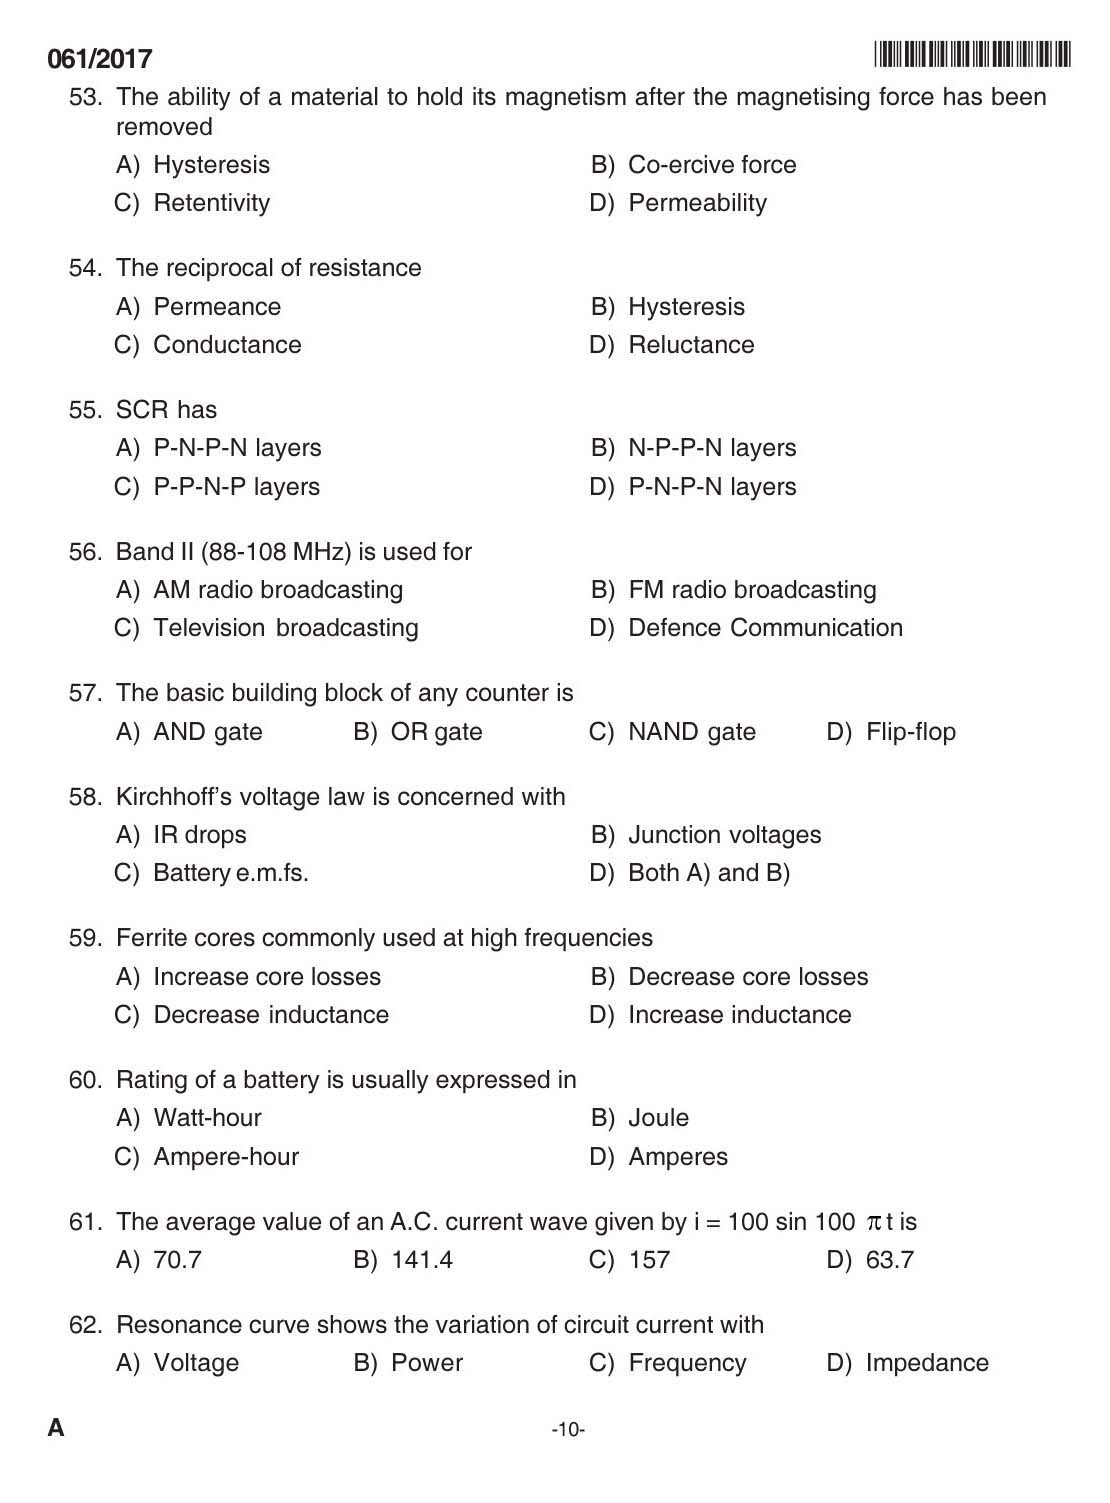 Kerala PSC Tradesman Exam Question Code 0612017 9